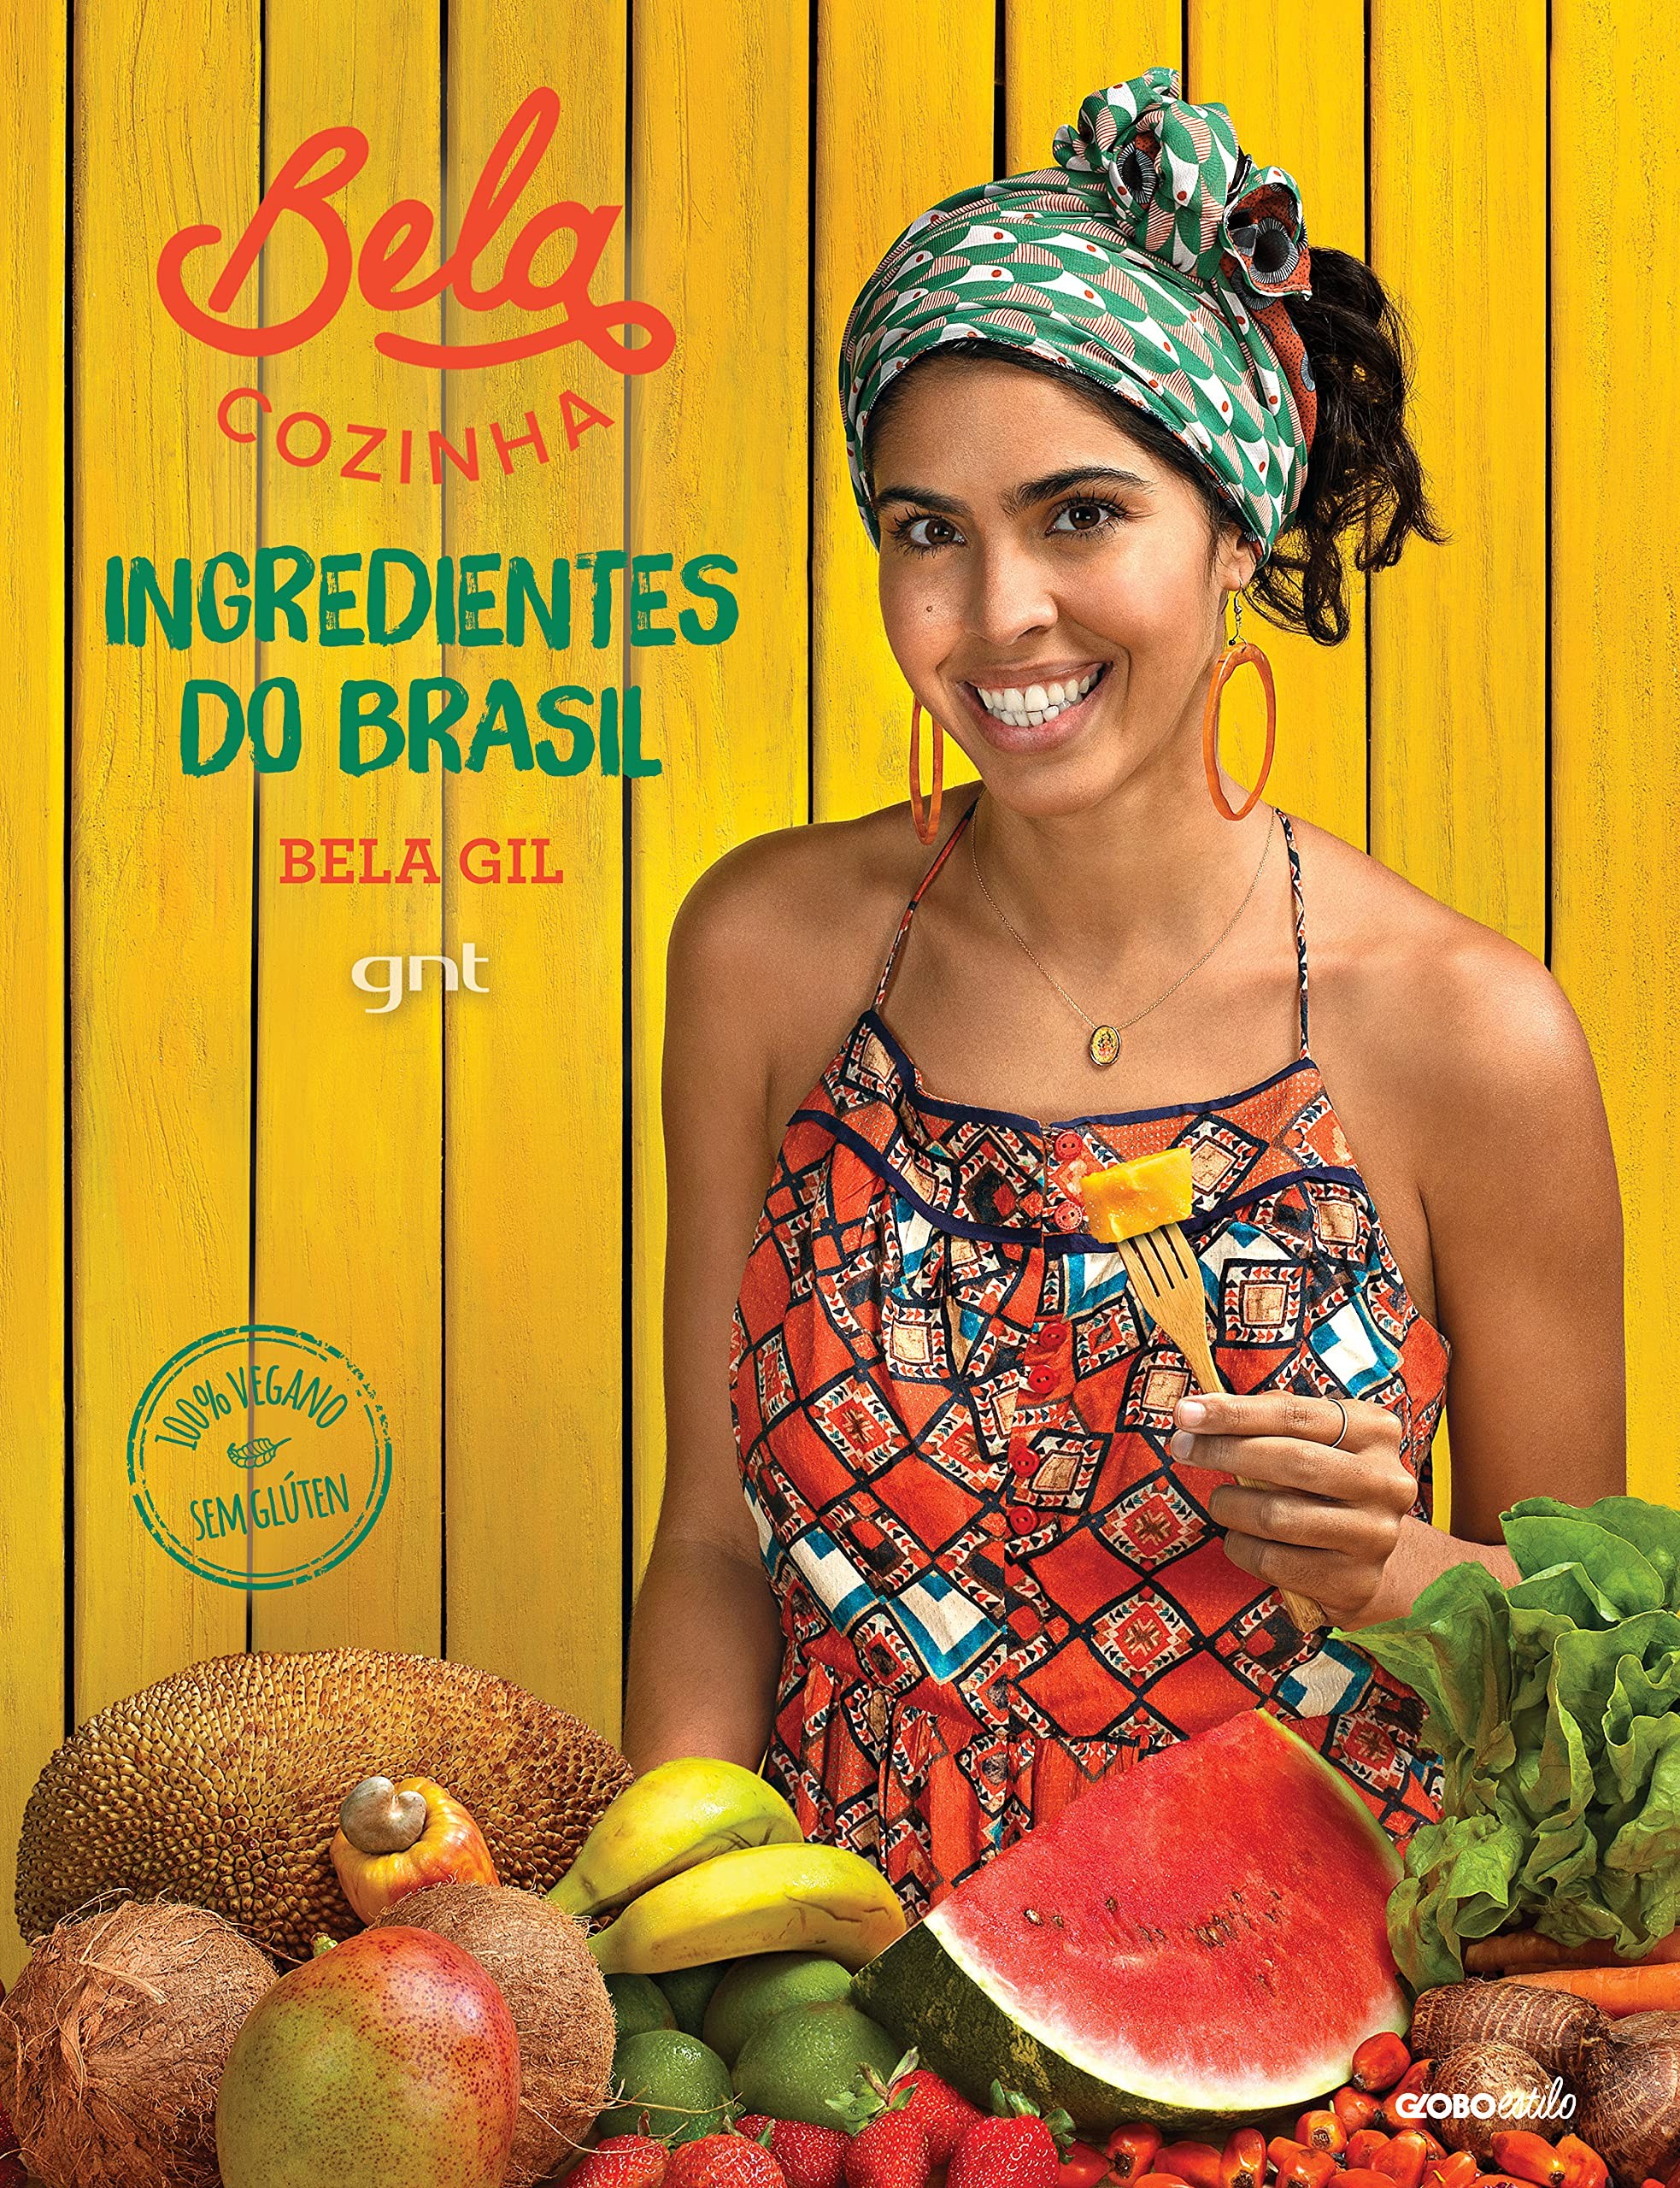 Bela Cozinha - Ingredients from Brazil, Bela Gil (Photo: reproduction/Amazon)